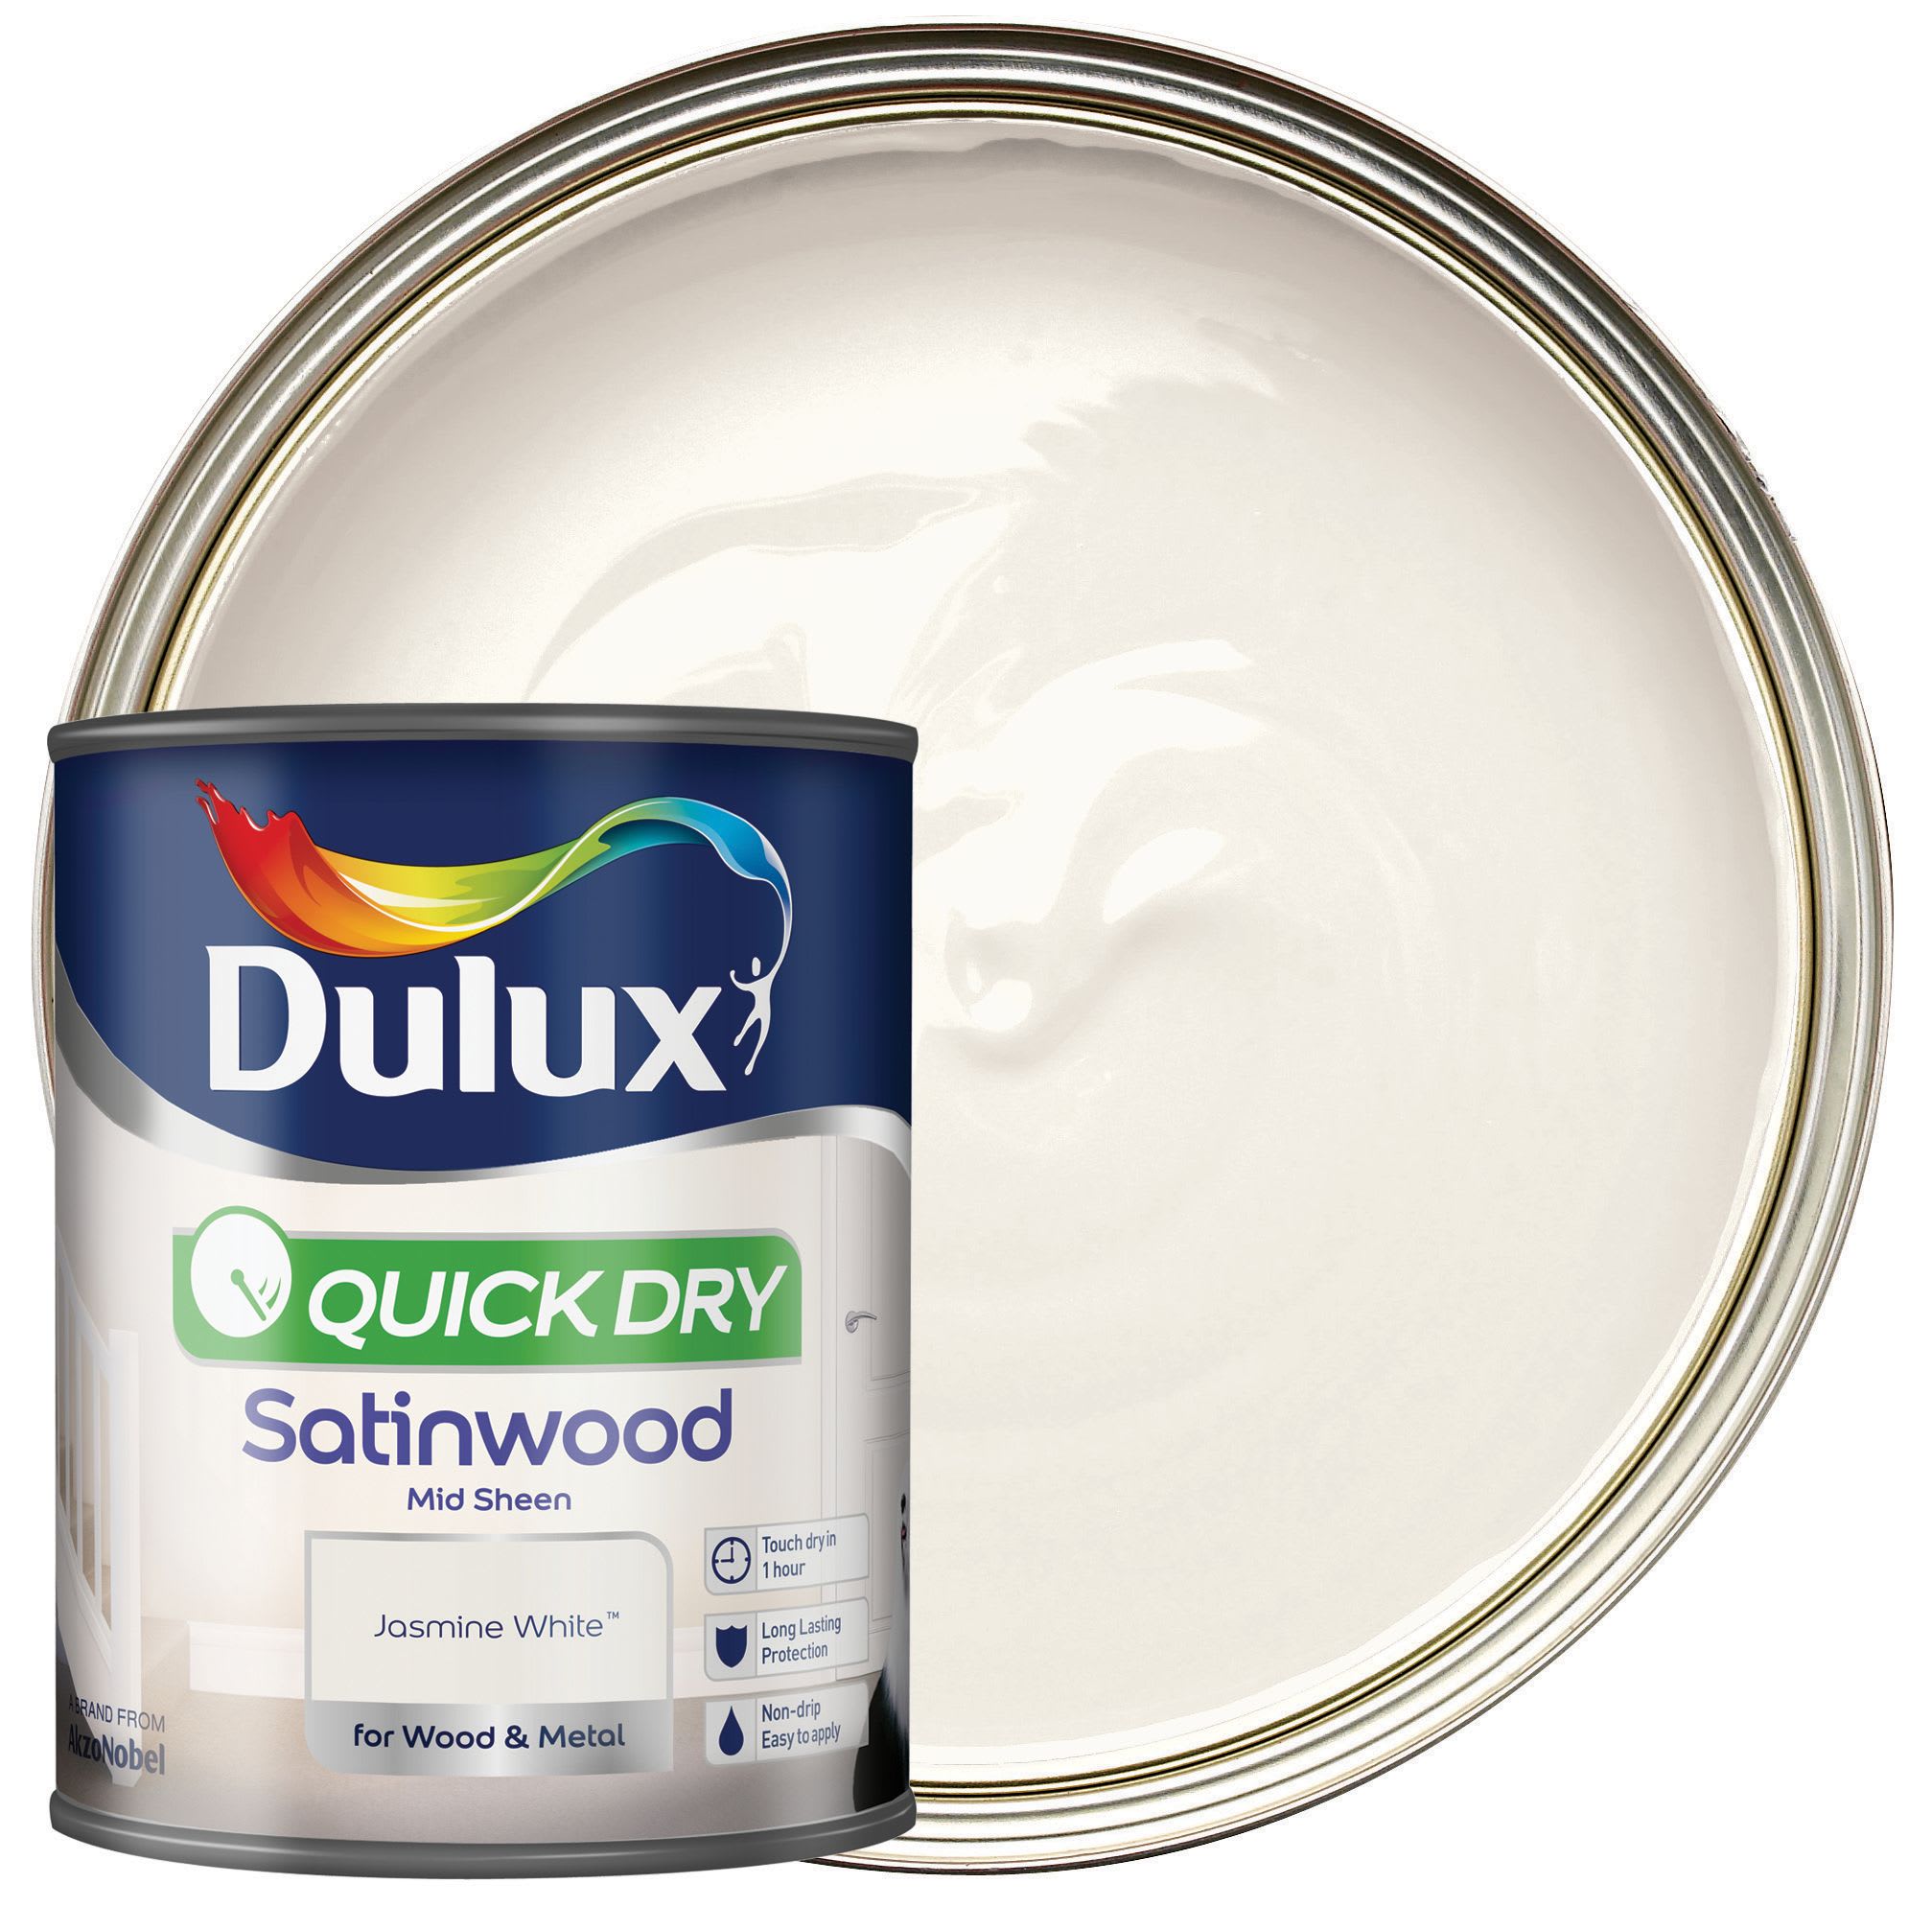 Dulux Quick Dry Satinwood Paint - Jasmine White